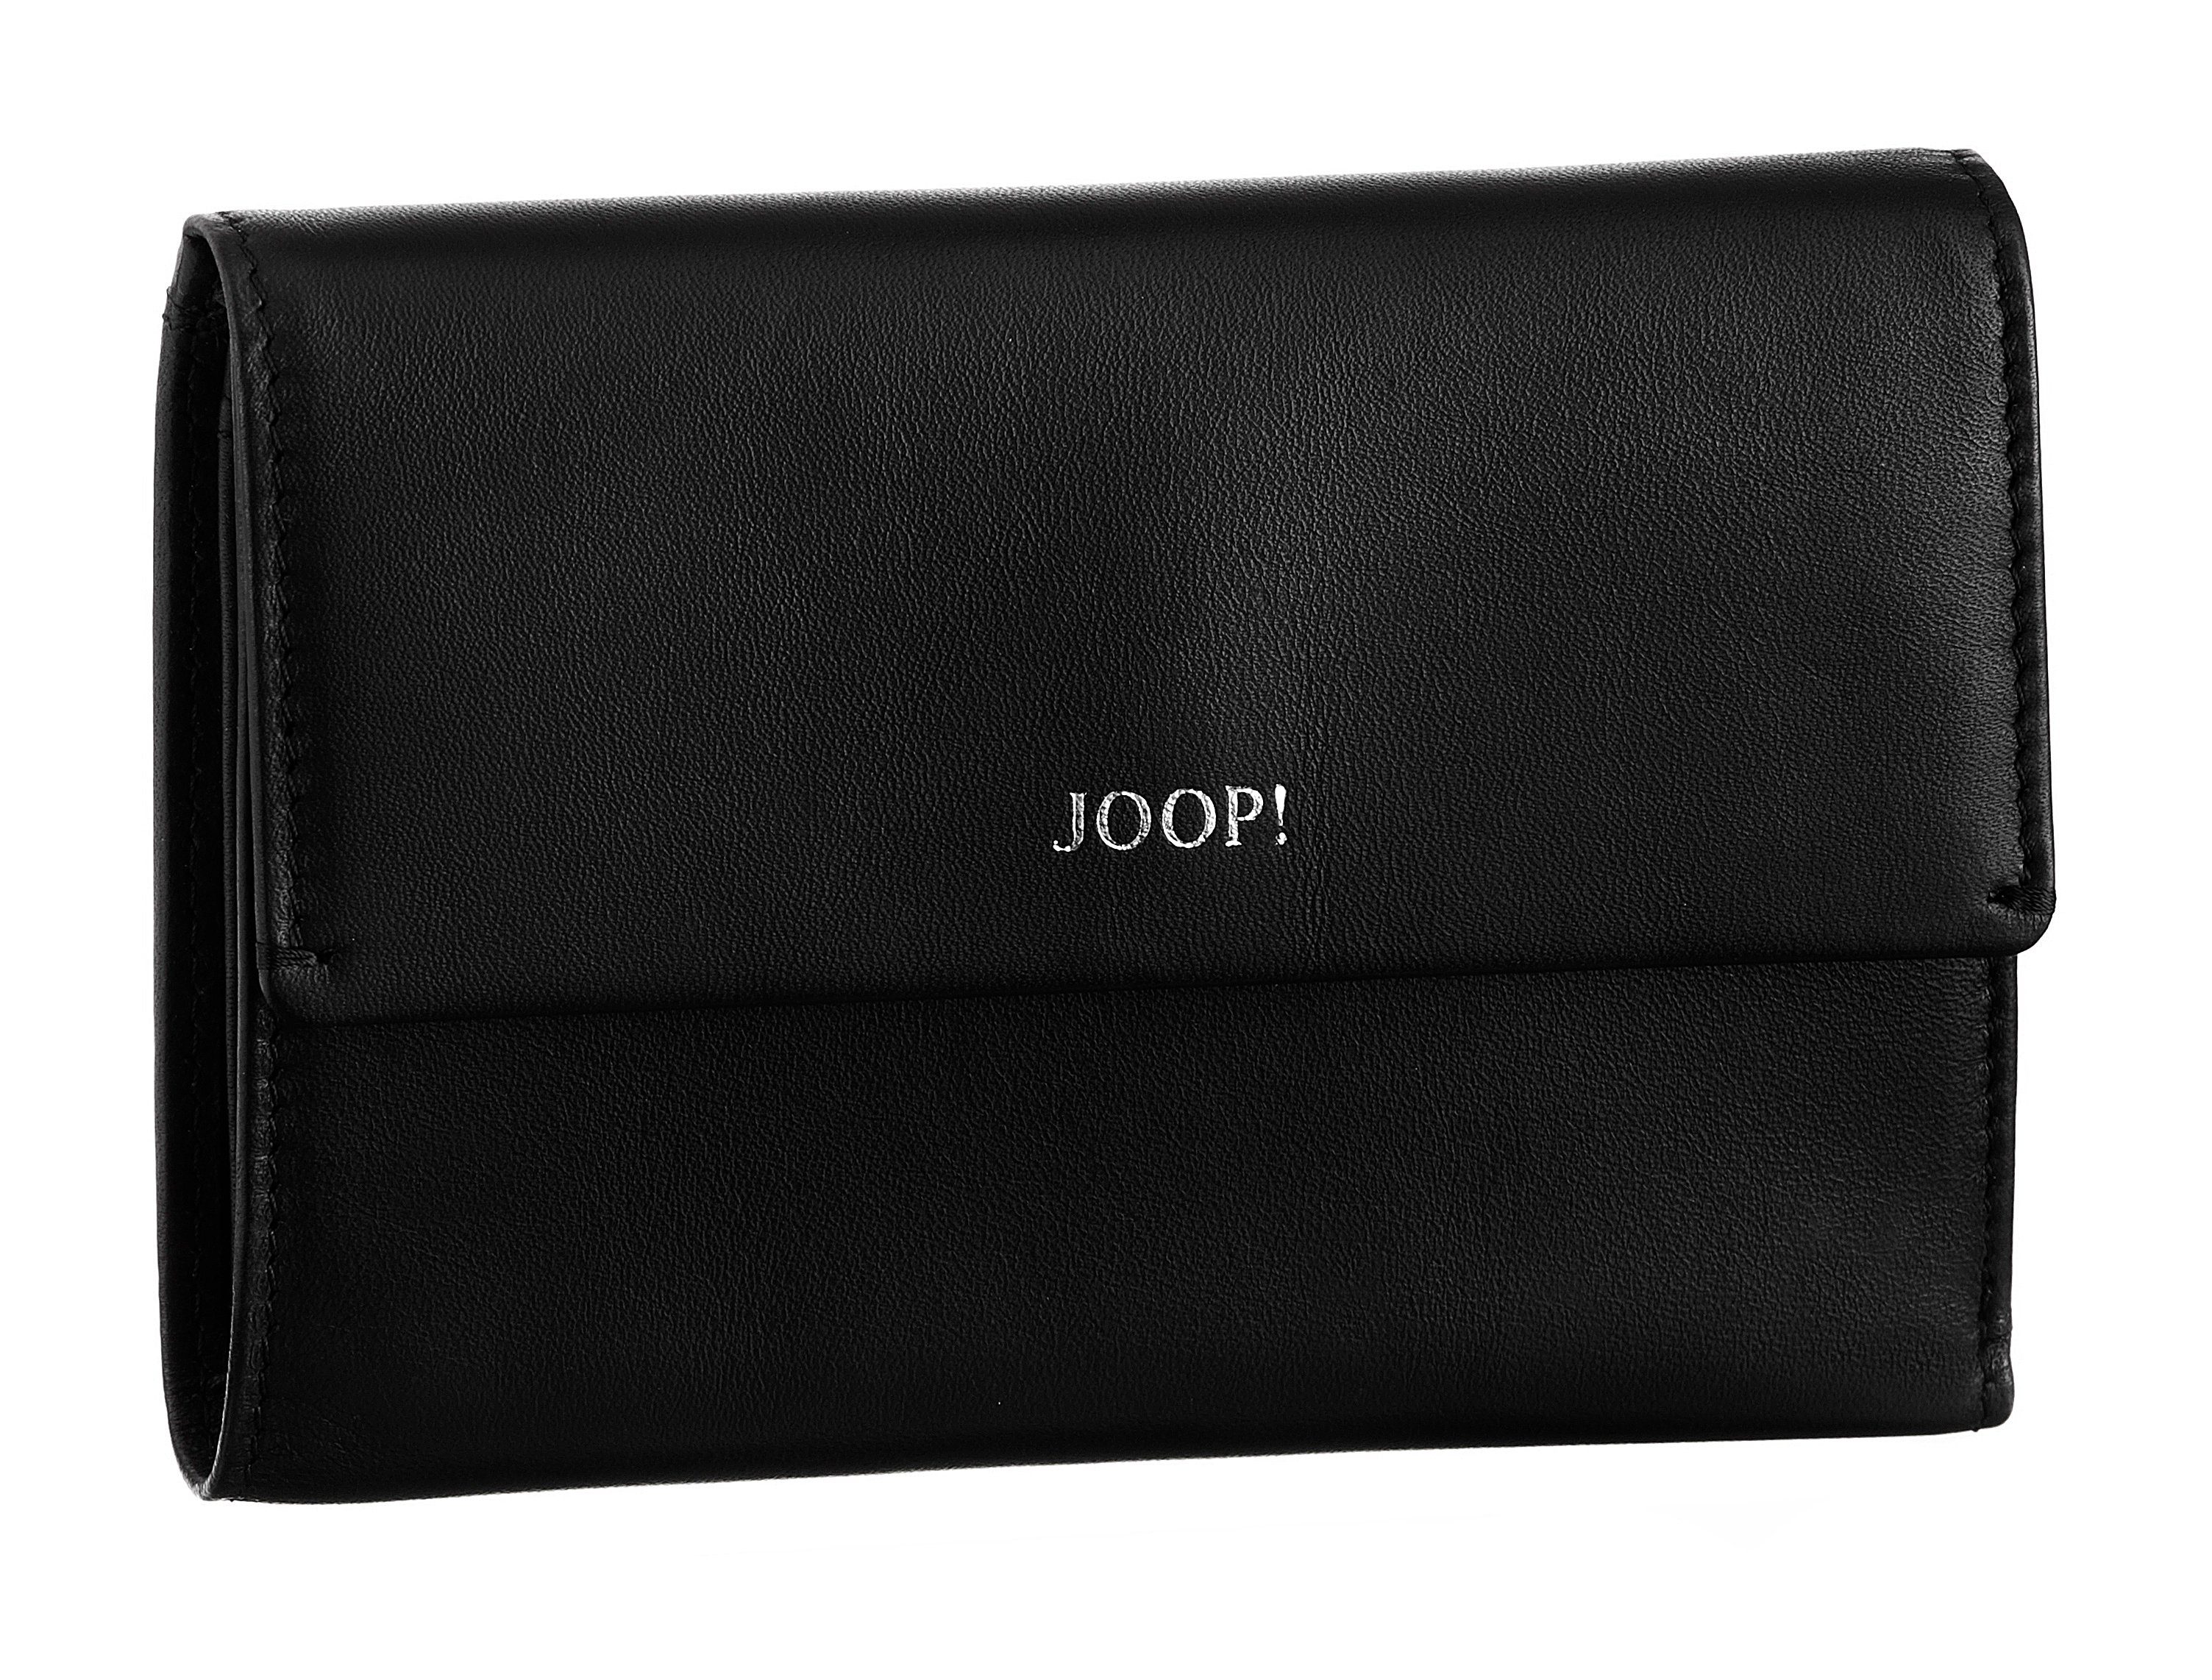 Joop! Geldbörse Design in cosma schlichtem 1.0 sofisticato purse black mh10f